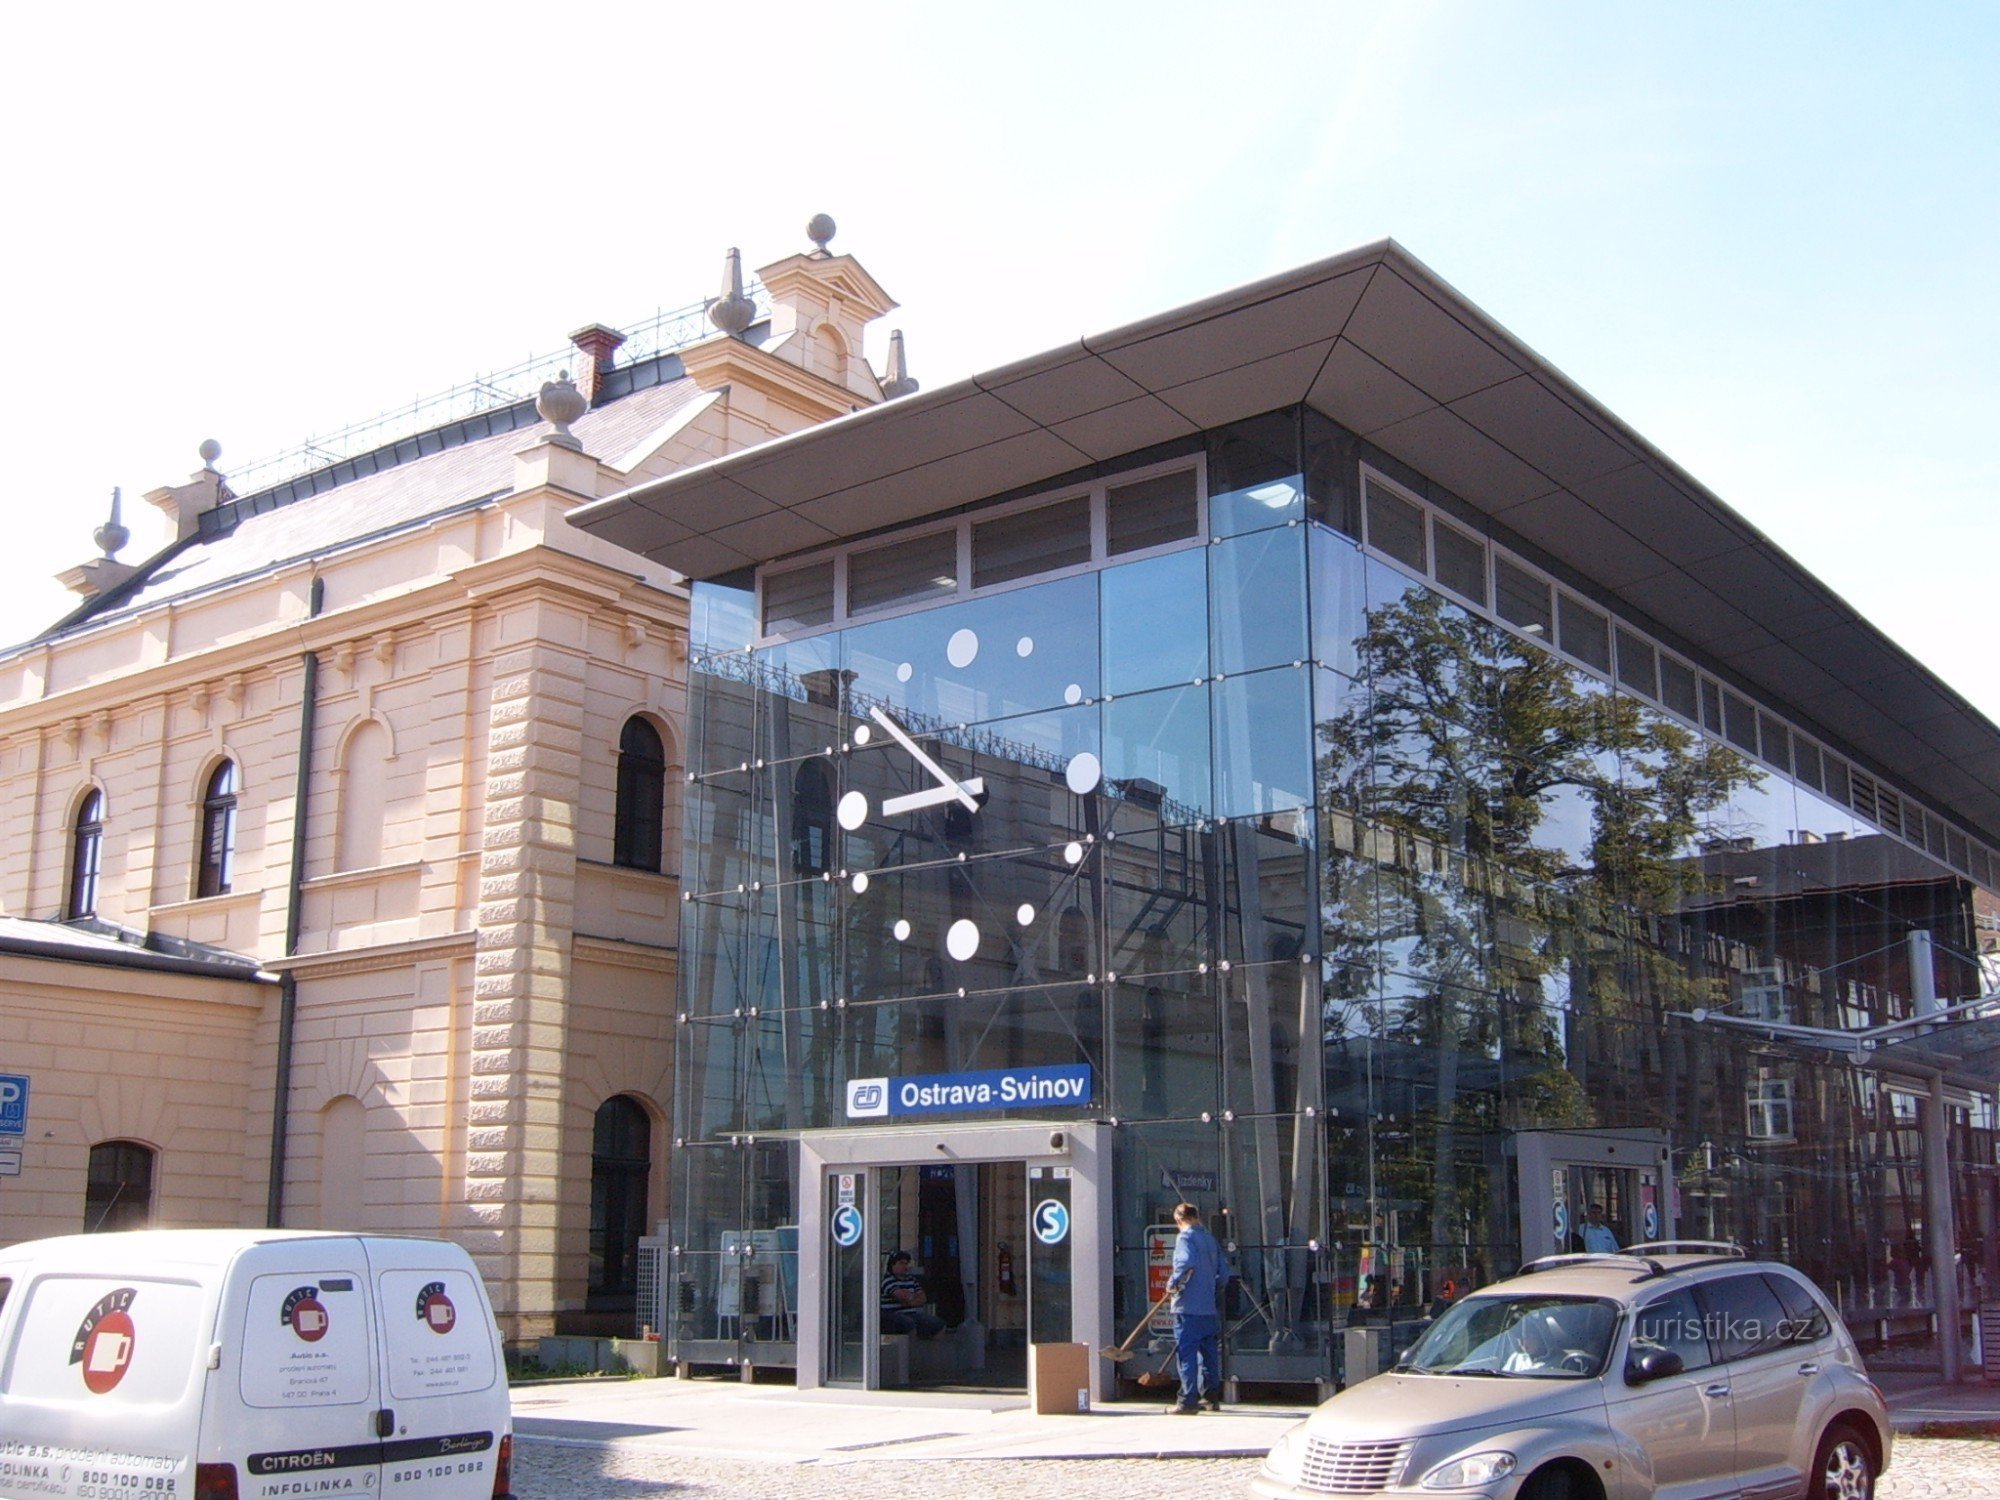 Dispatch building of the Ostrava Svinov station